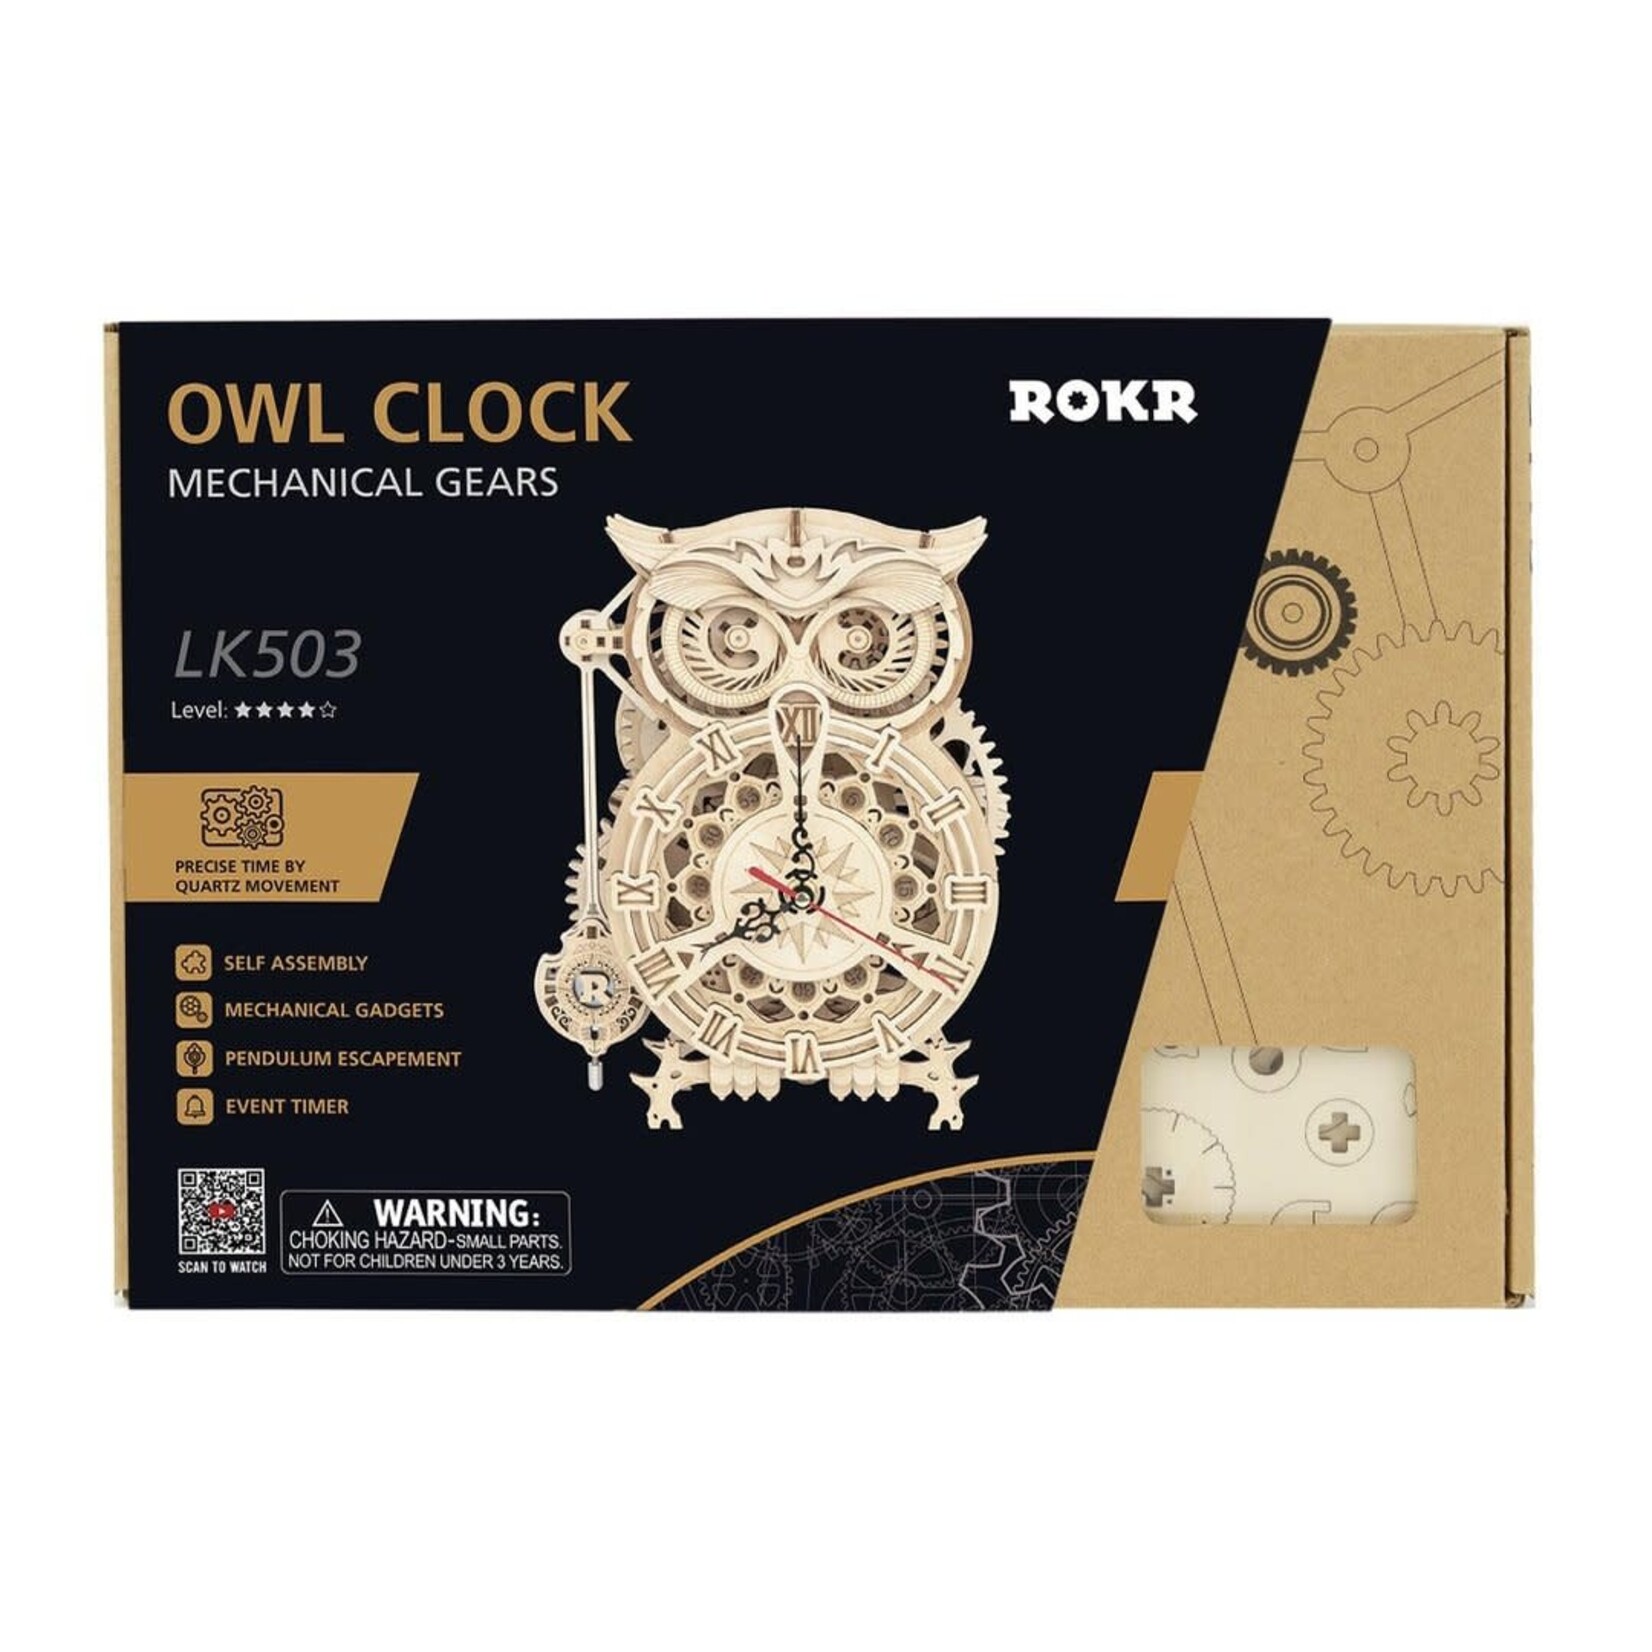 ROKR Mechanical LK503 Owl Clock